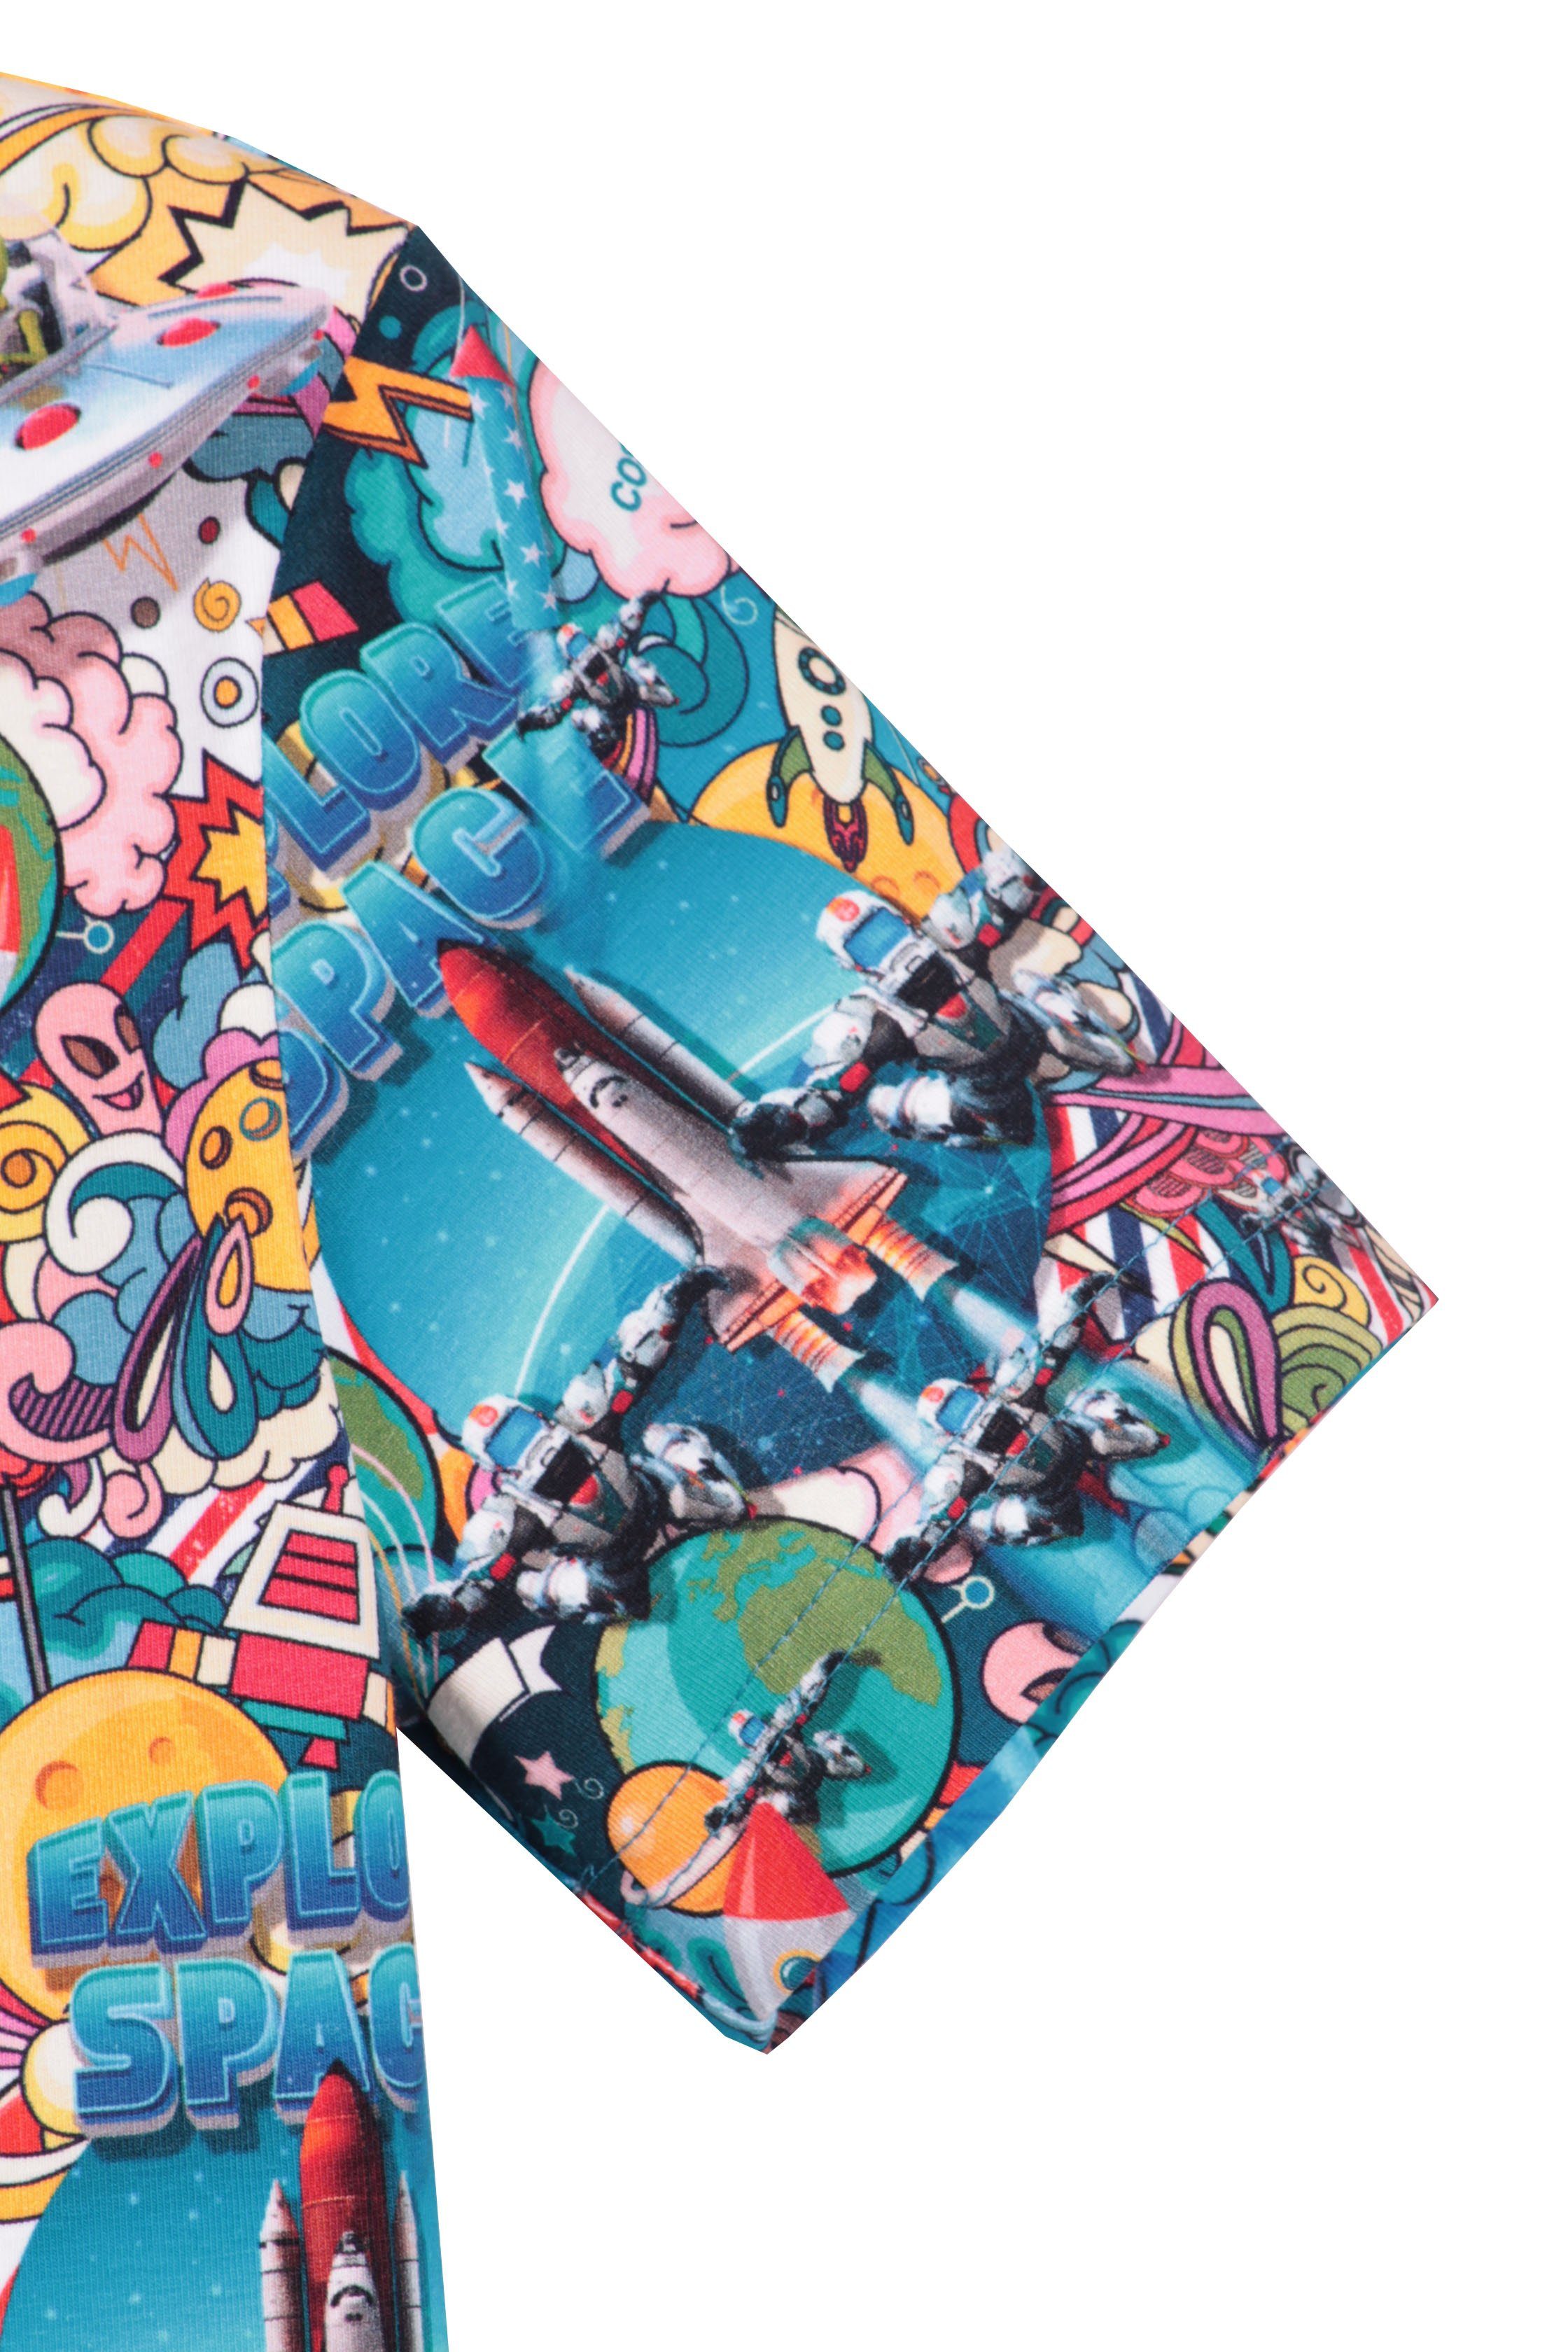 Rundhalsauschnitt, Alloverprint, Baumwolle coolismo mit für Print-Shirt Jungen Comic-Raketen-Motiv T-Shirt